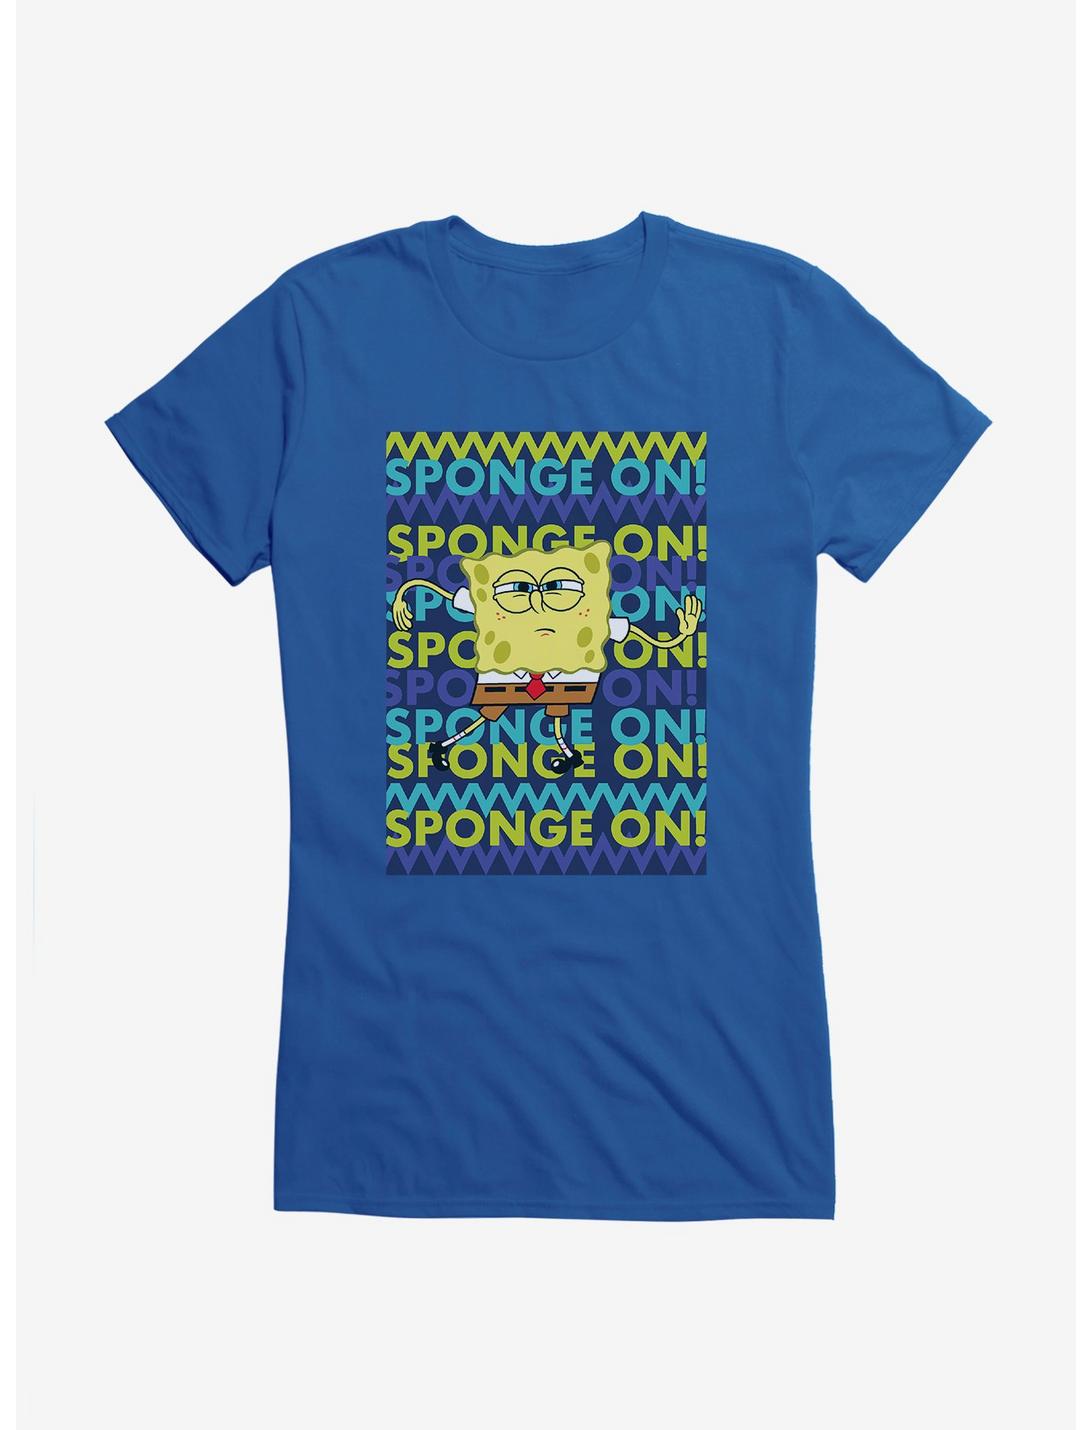 SpongeBob SquarePants  Sponge On Girls T-Shirt, , hi-res